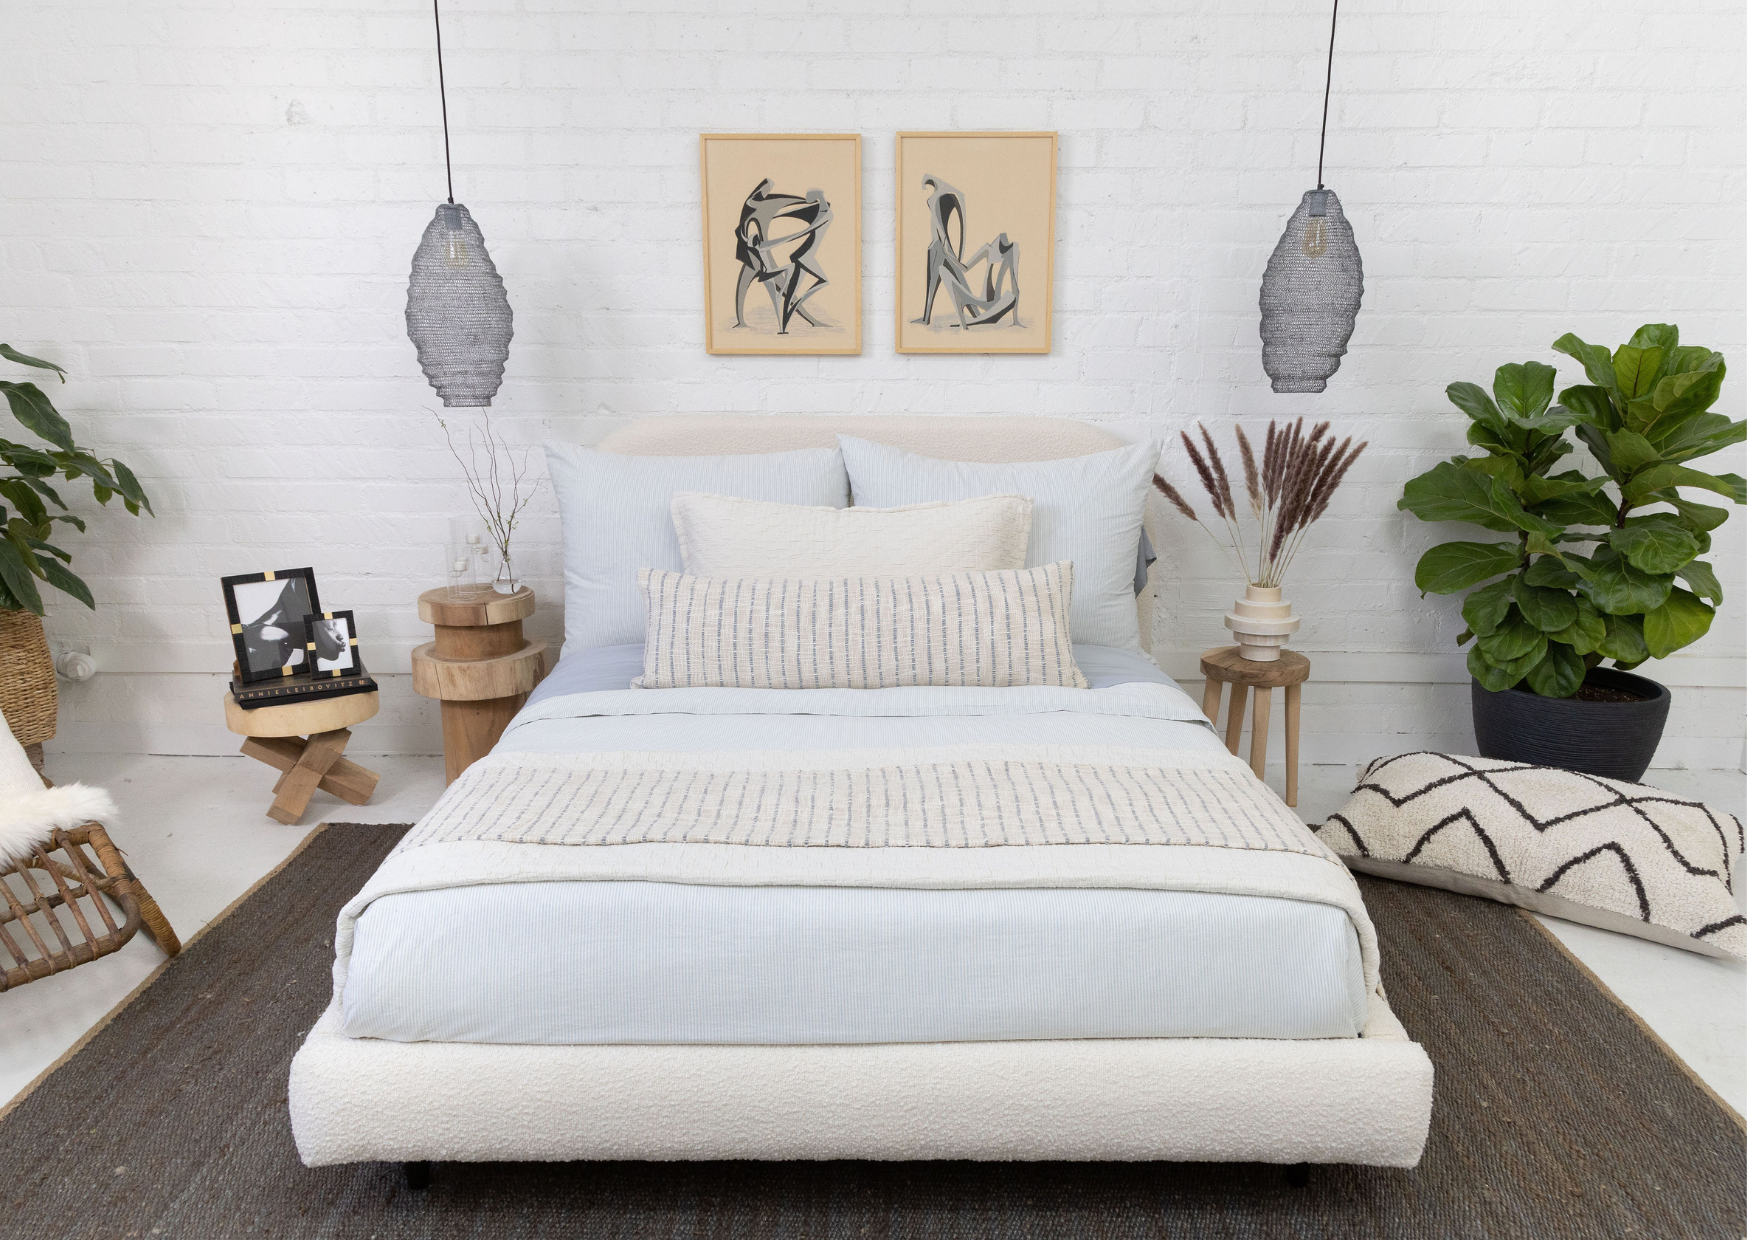 Frankie Big Pillow With Insert By Pom Pom At Home – Bella Vita